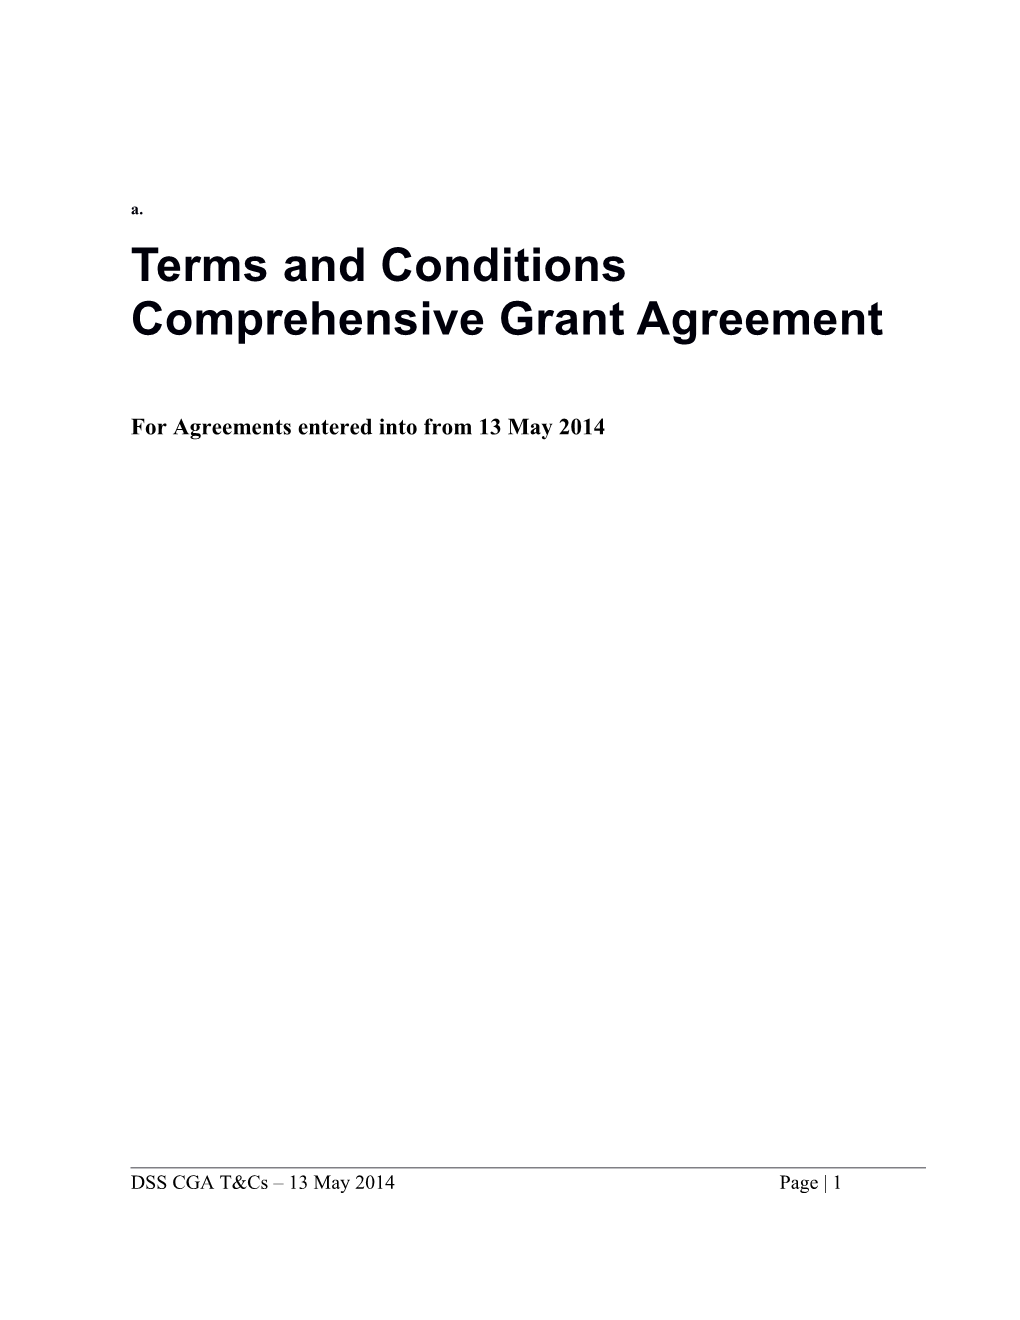 Termsand Conditions Comprehensivegrant Agreement